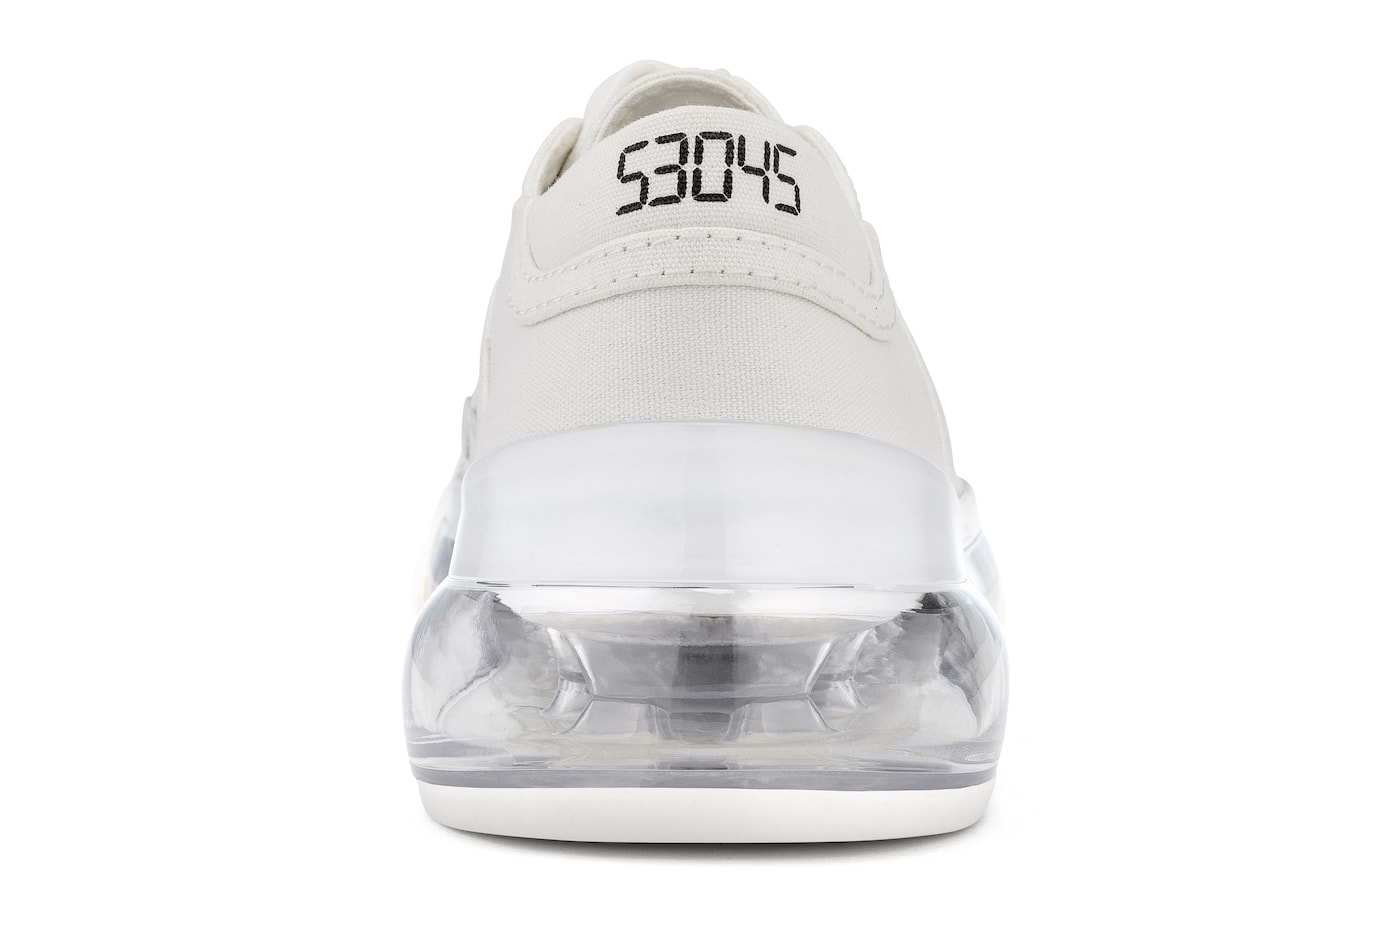 SHOES 53045 全新運動鞋款 SNEAK'AIR 正式登場